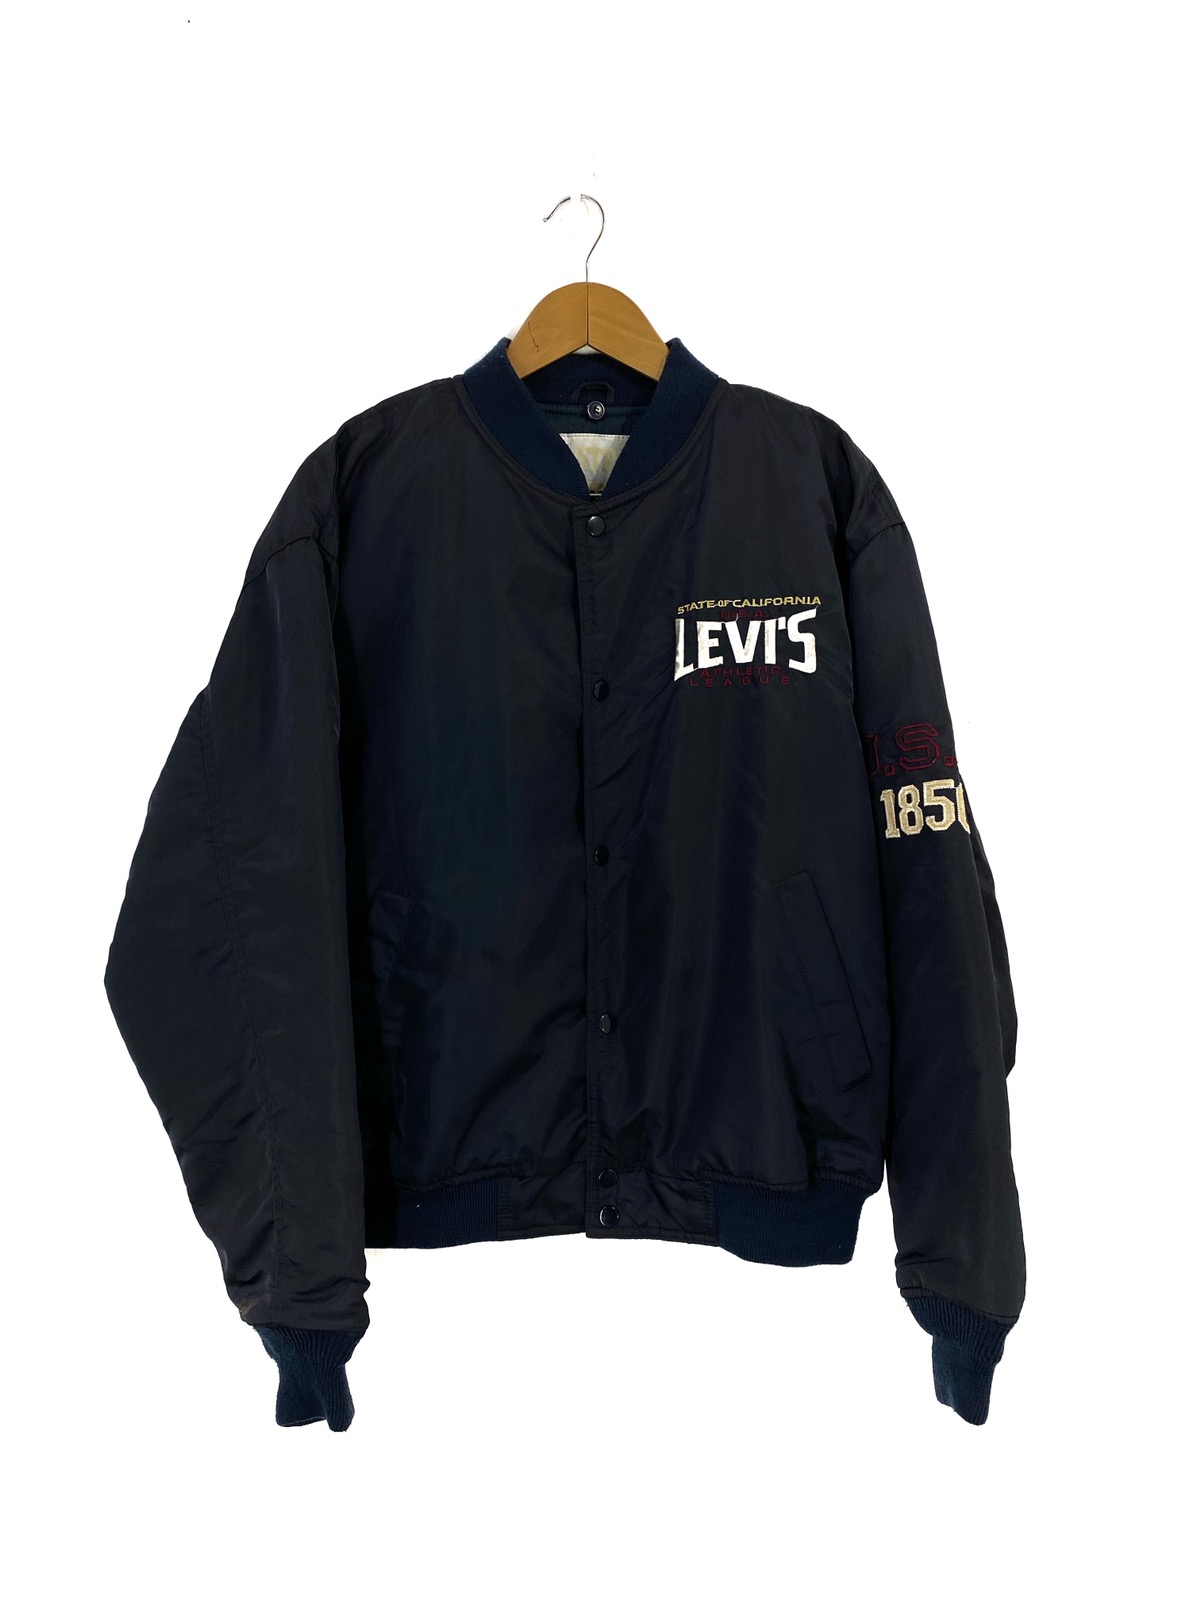 Levi's Levi's Bomber Jacket Big Logo Levi's San Francisco Design